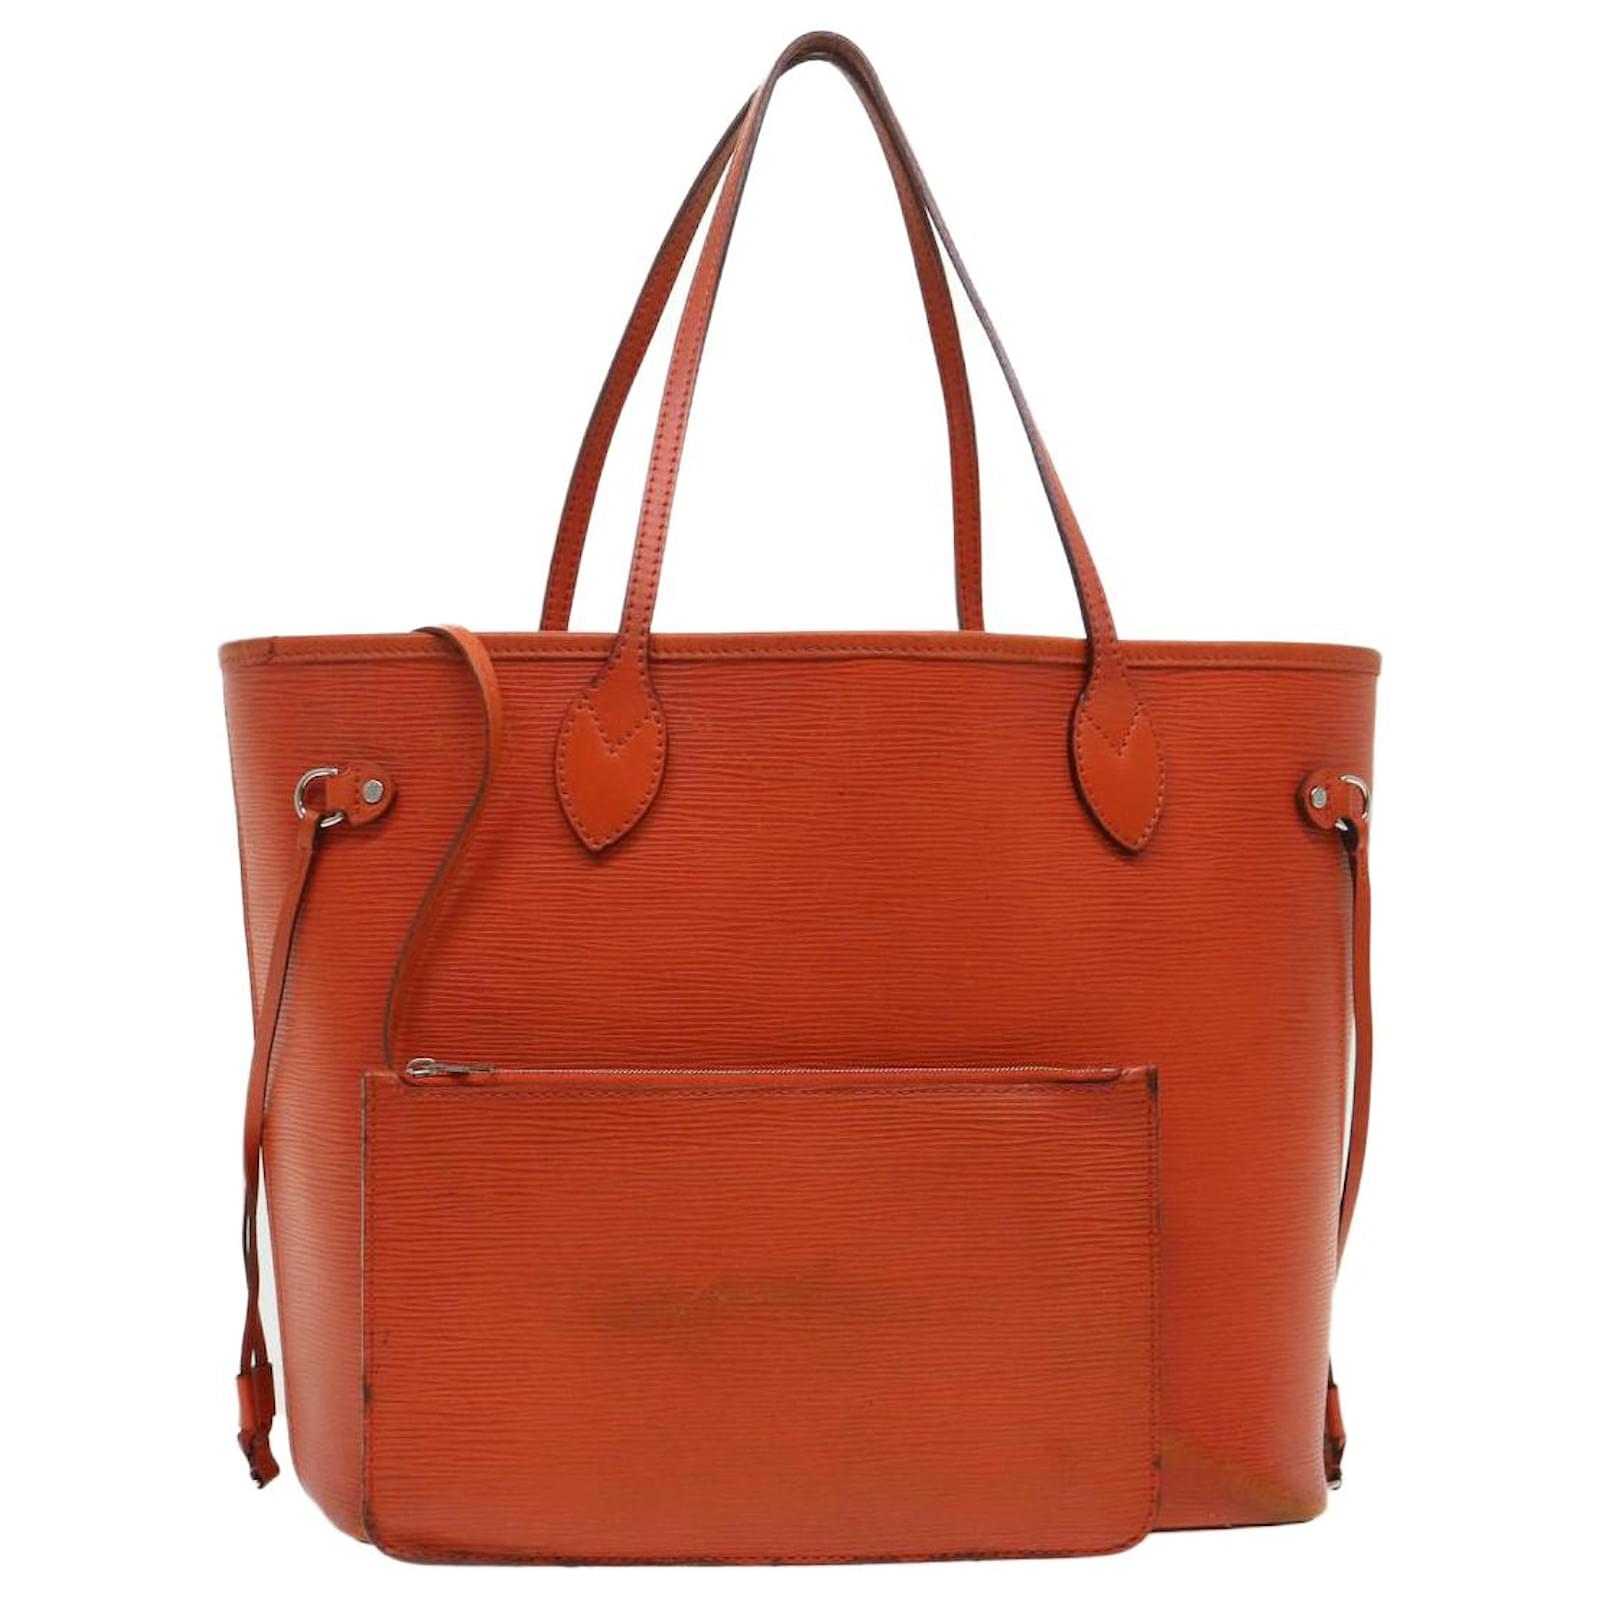 Louis Vuitton Epi Neverfull MM w/ Pouch - Orange Totes, Handbags